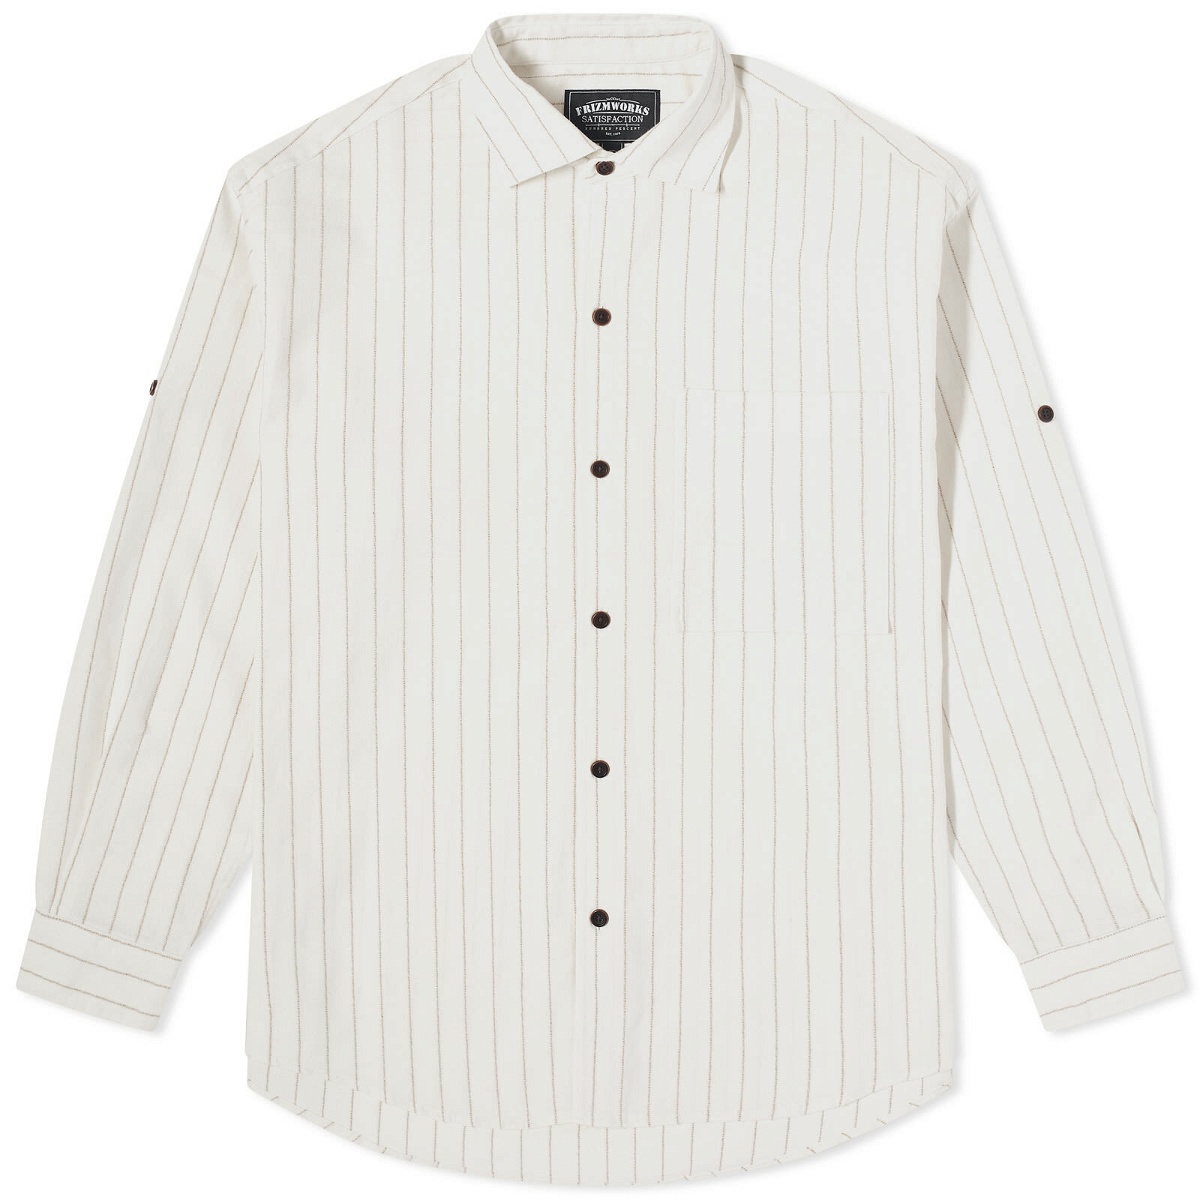 Photo: FrizmWORKS Men's Stripe Linen Napoli Shirt in White